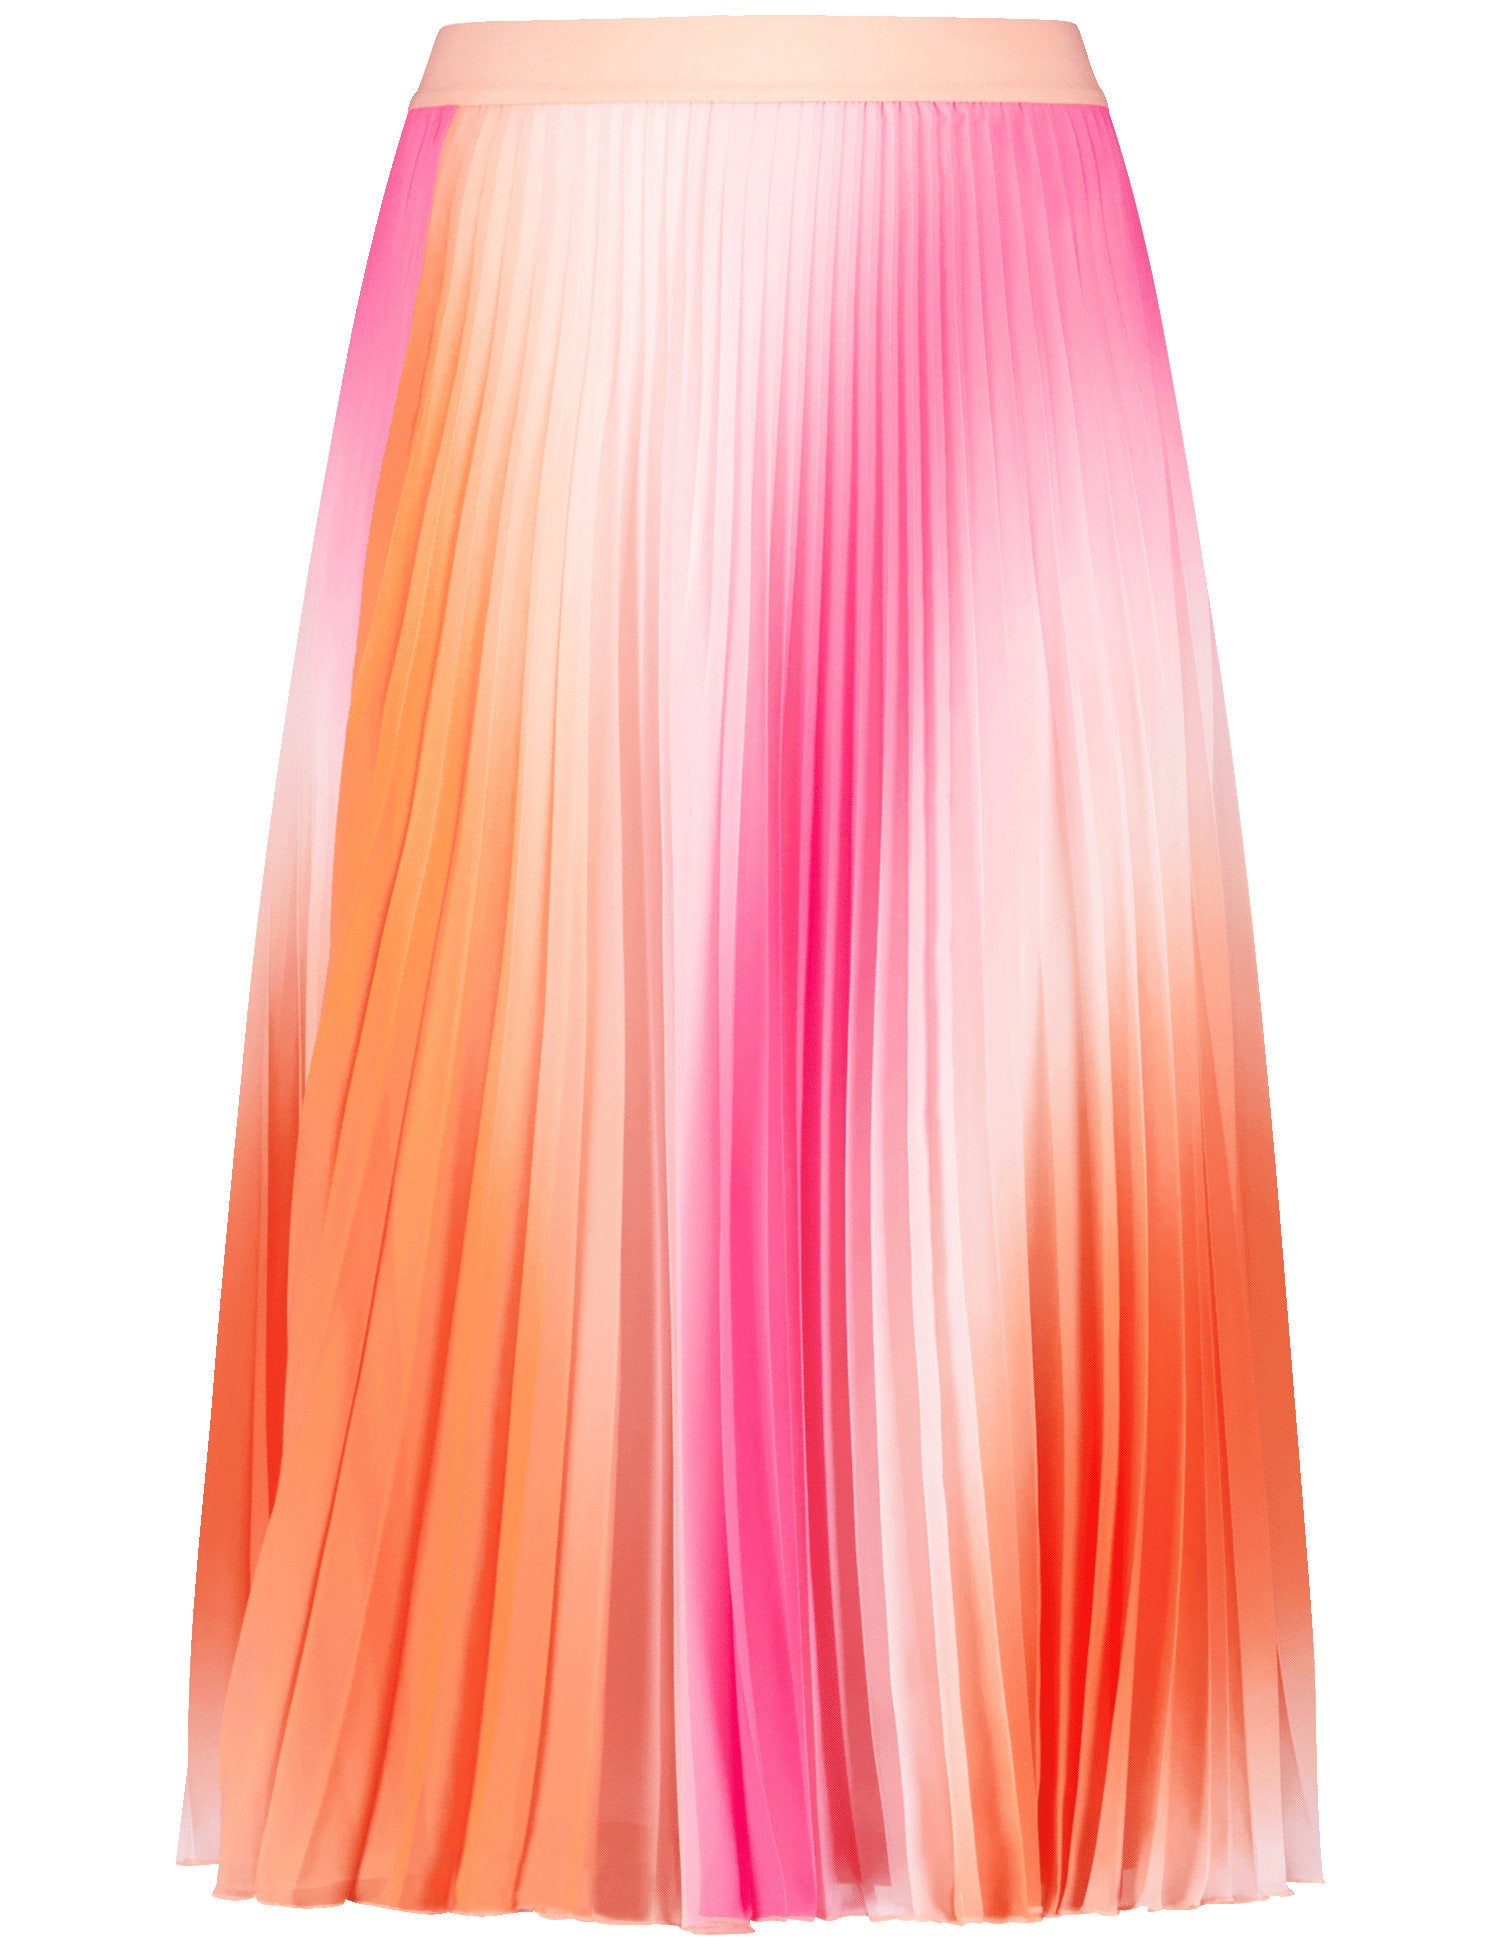 Pleated Skirt With Colour Graduation_310028-31268_3038_07